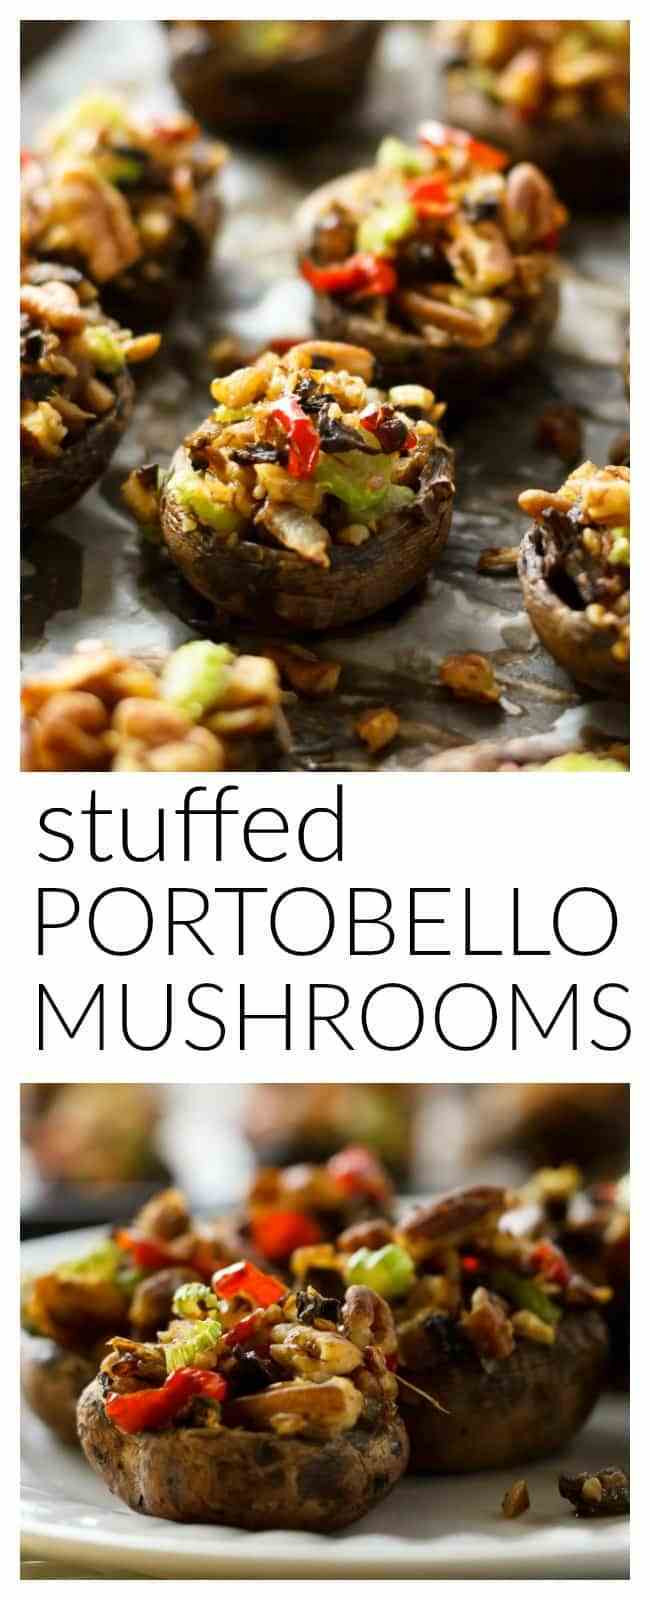 Healthy Stuffed Portobello Mushrooms
 Vegan Stuffed Portobello Mushrooms